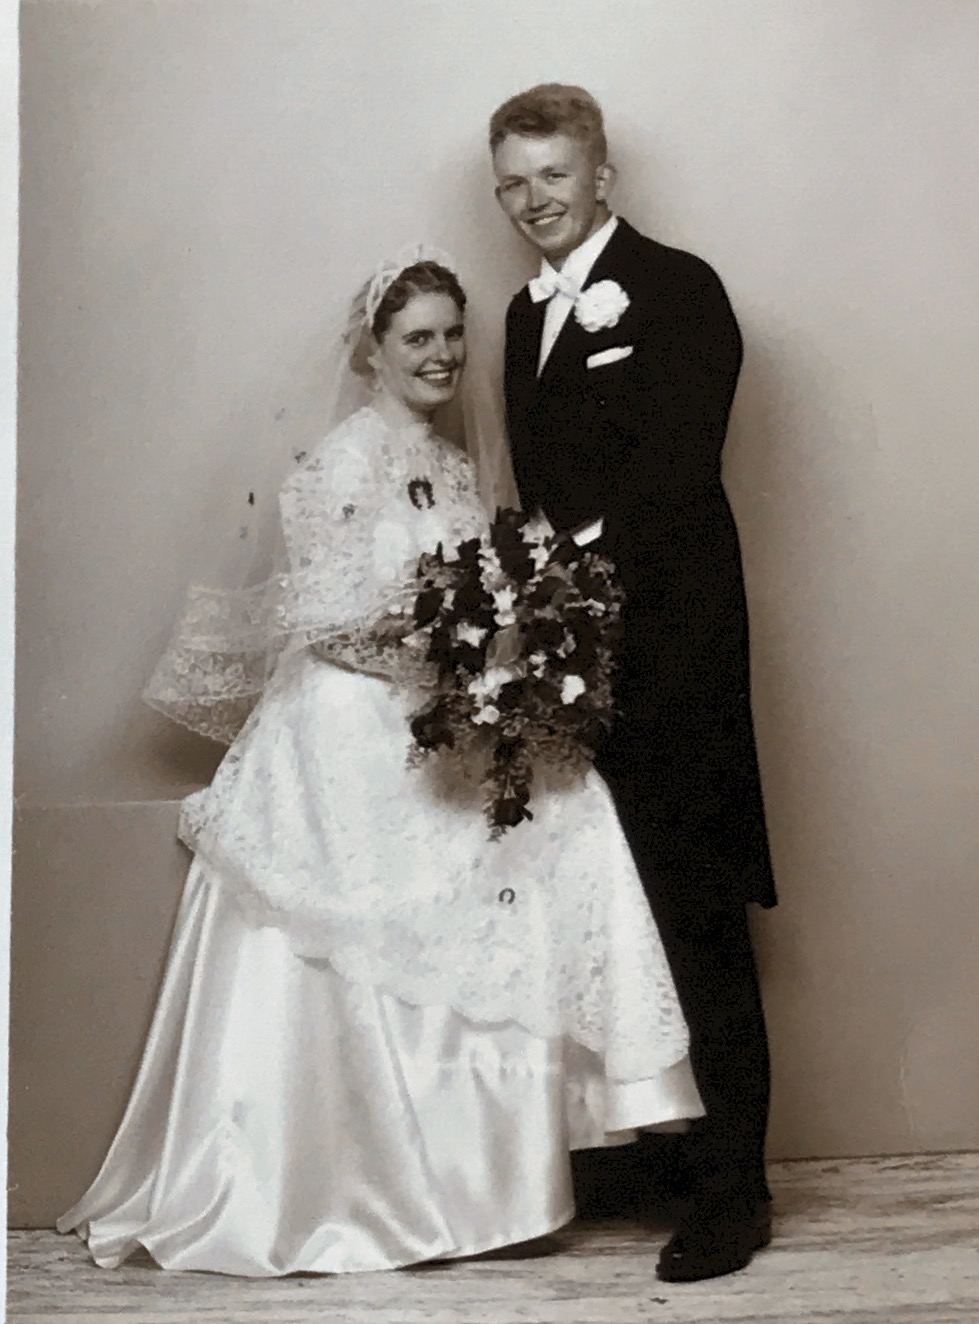 Kirsten & Bengt Ahlstrøm bryllupsbillede 13/6 1959 Århus Danmark